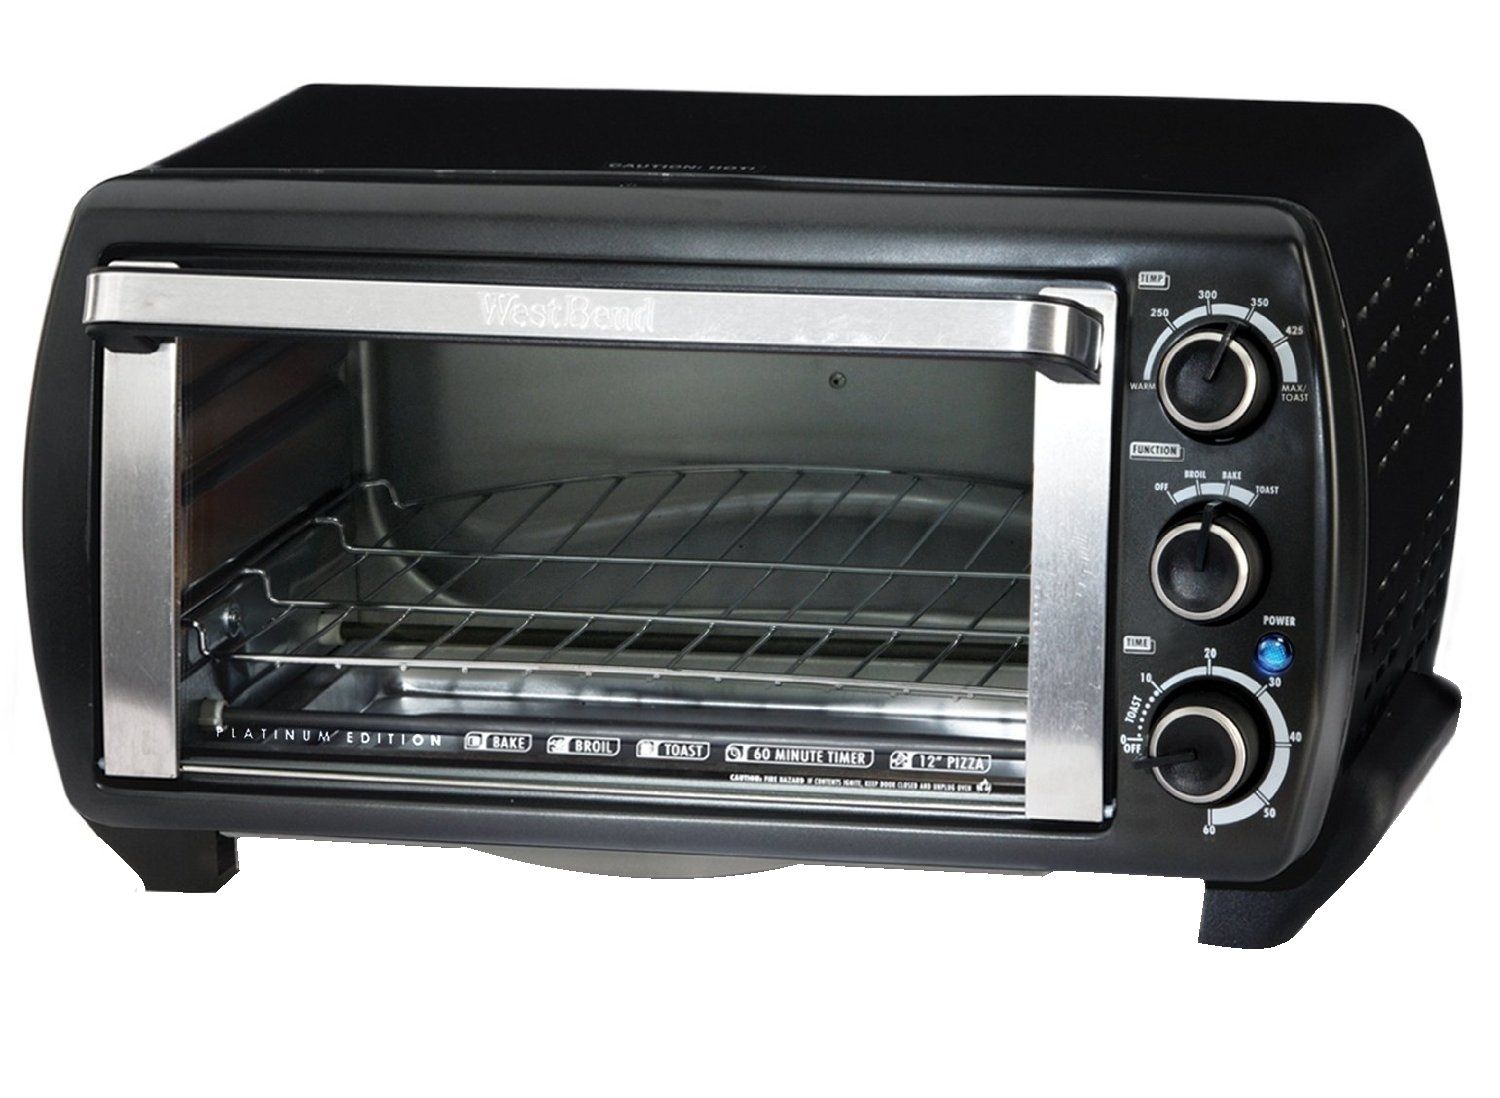 West Bend 6-Slice Toaster Oven